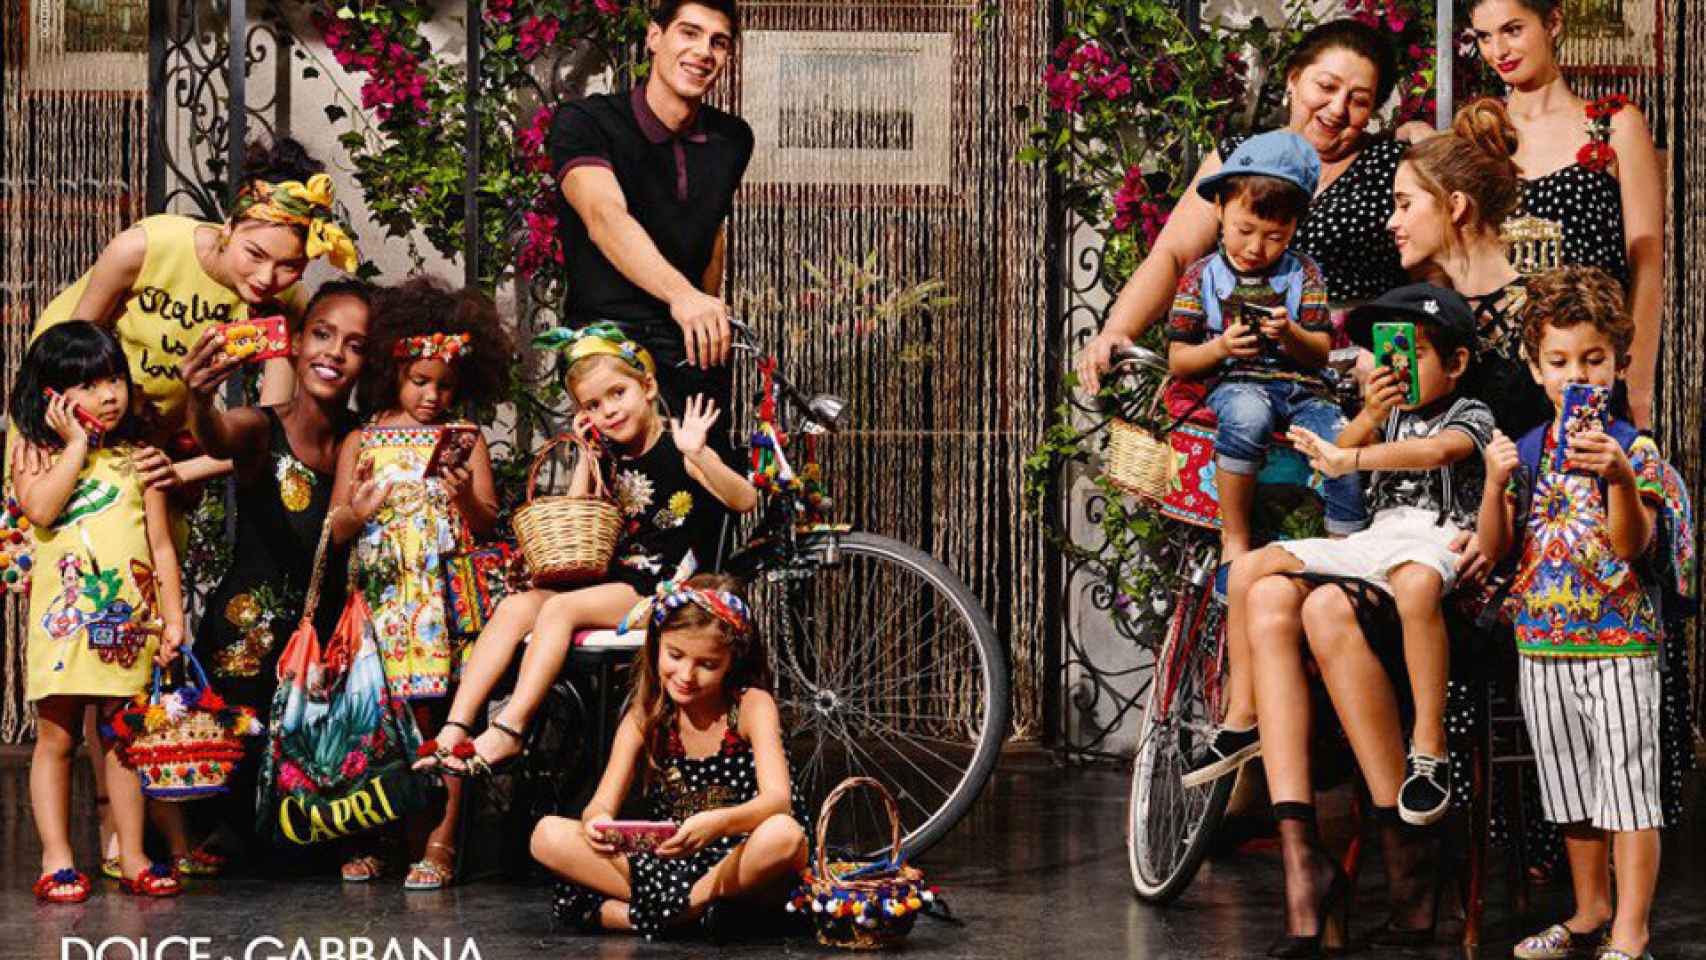 Campaña primavera-verano 2016 de Dolce Gabbana.